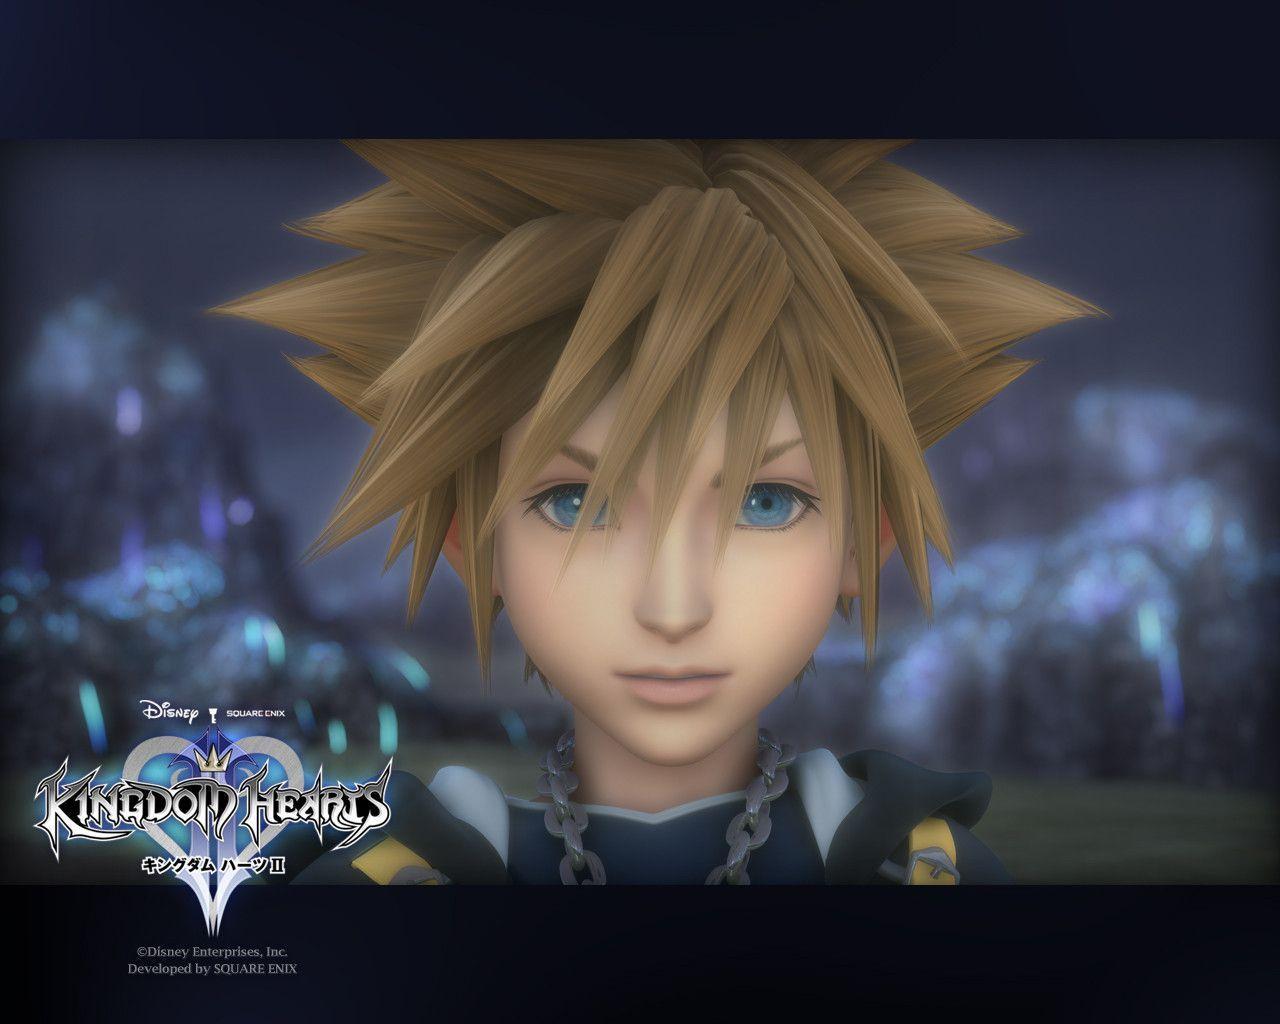 Kingdom Hearts screenshots, image and picture